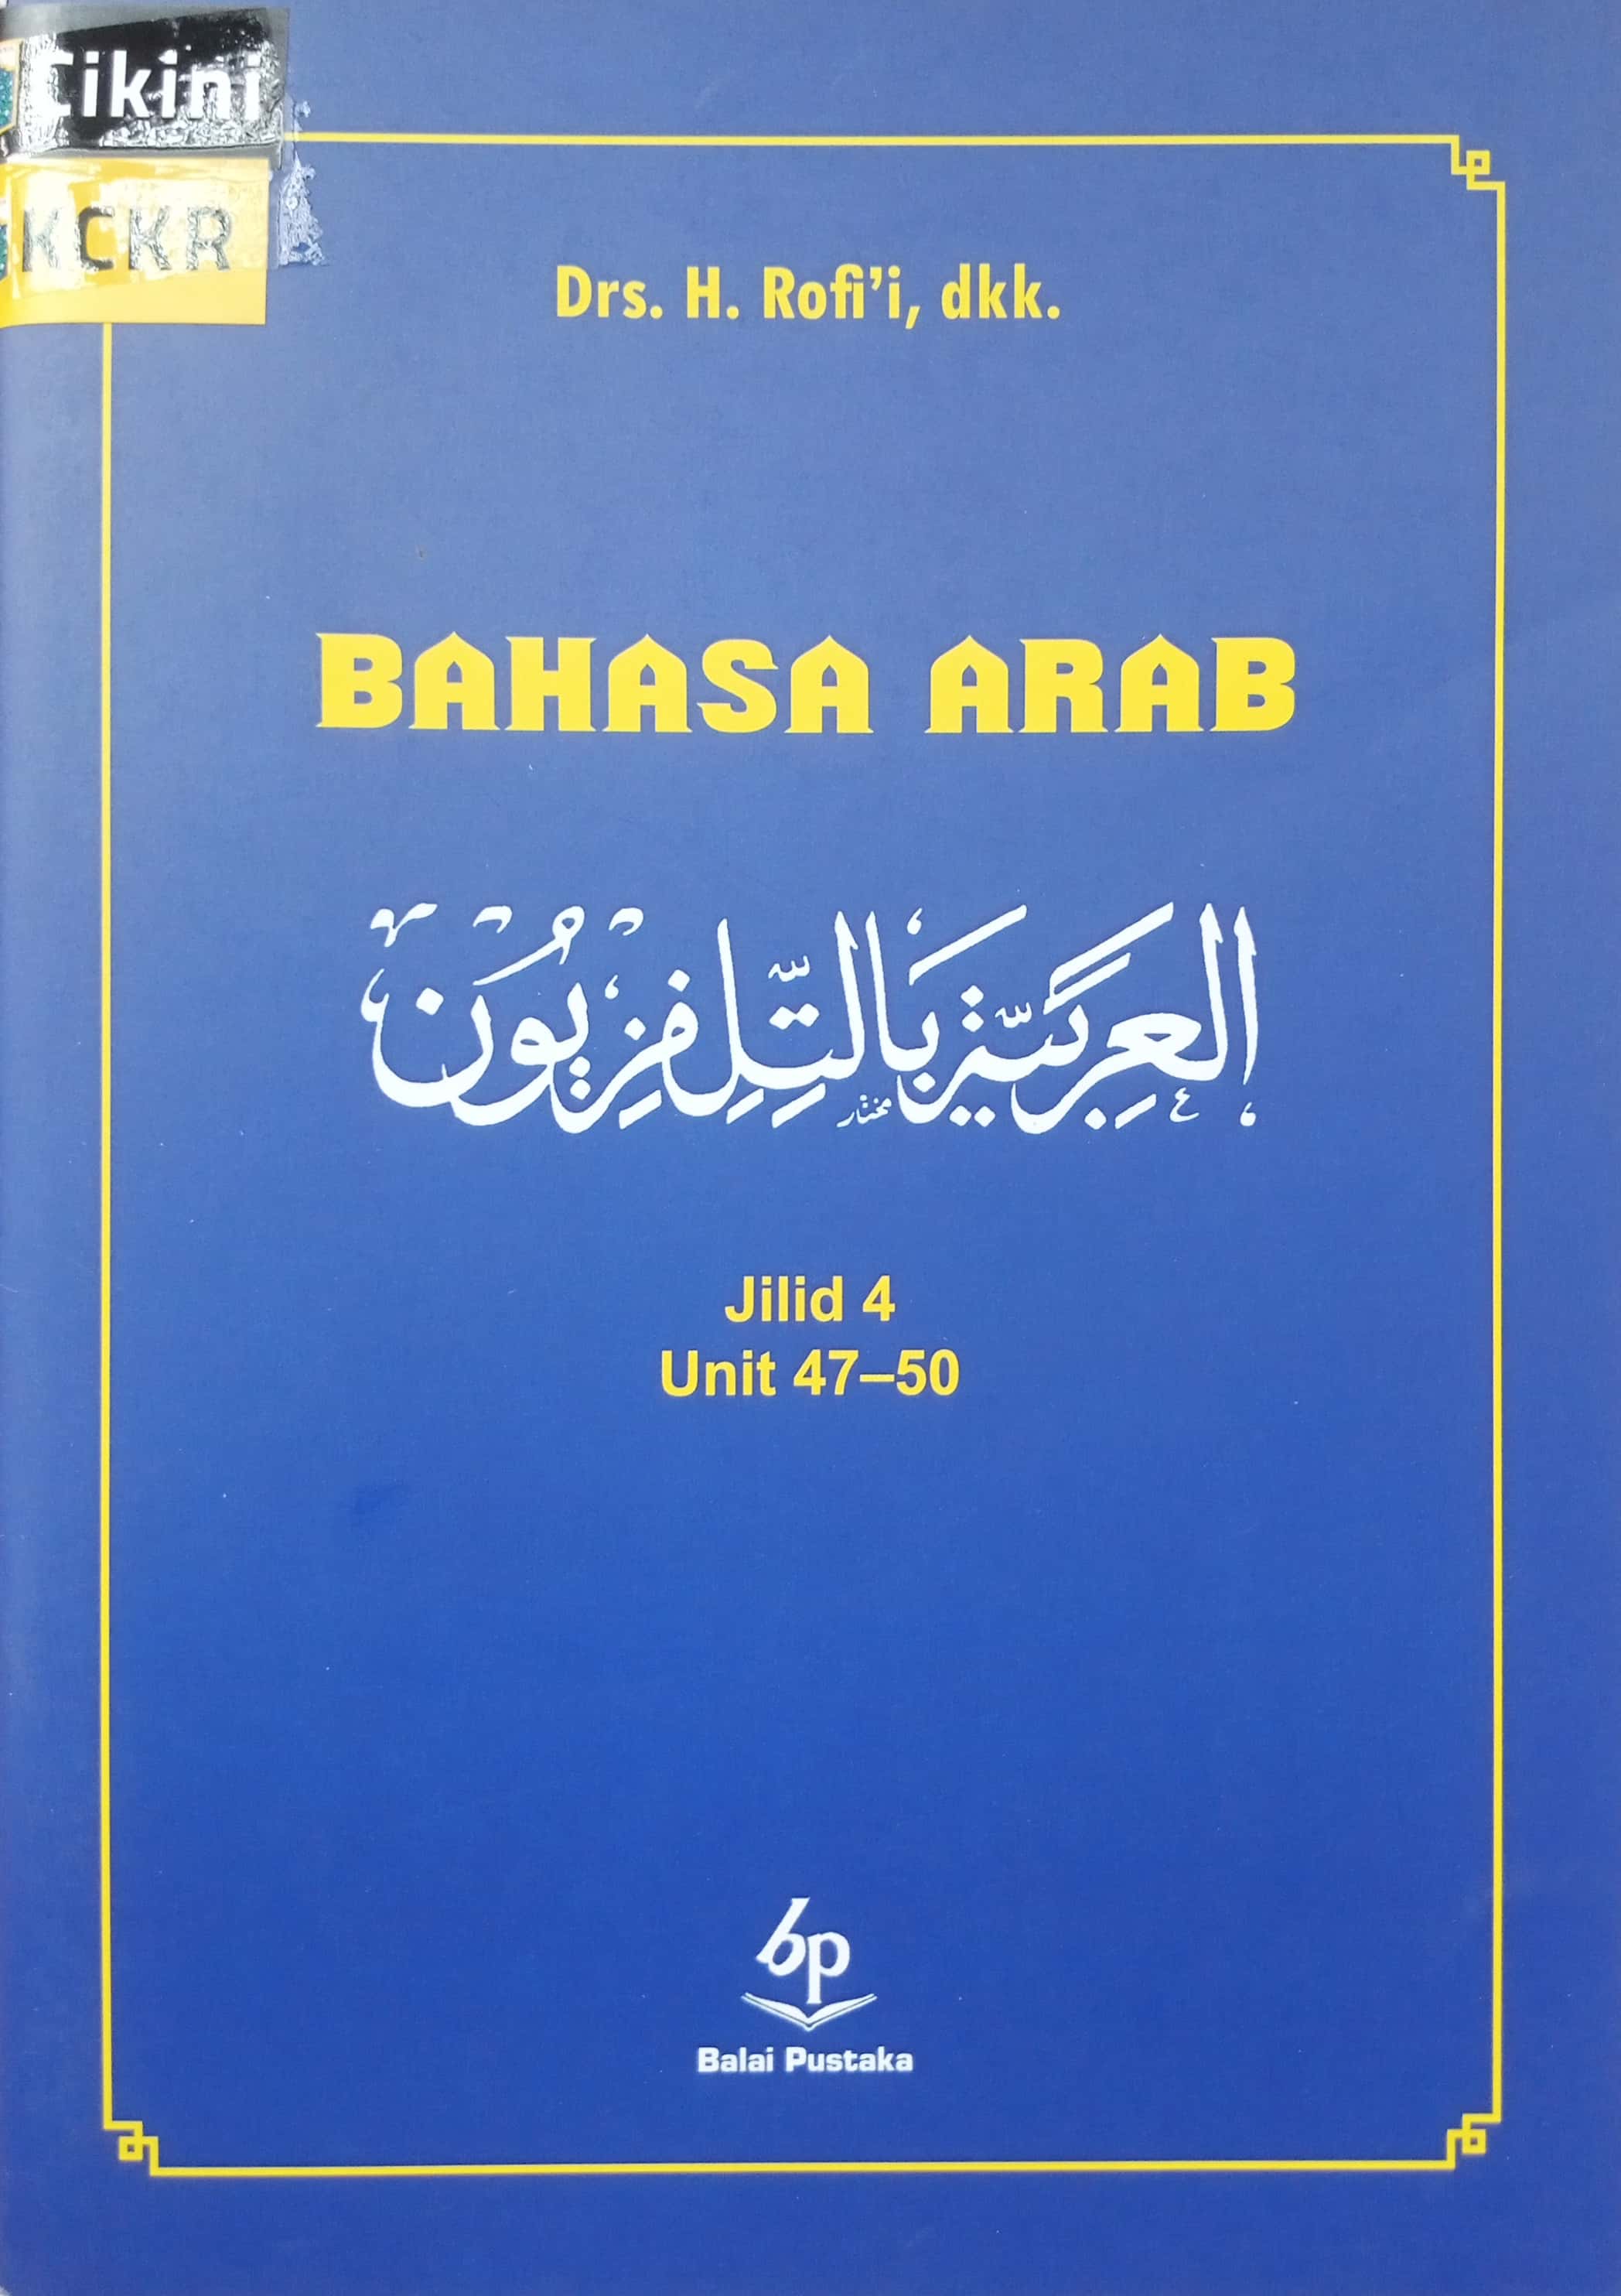 Bahasa Arab jilid 4 unit 47-50